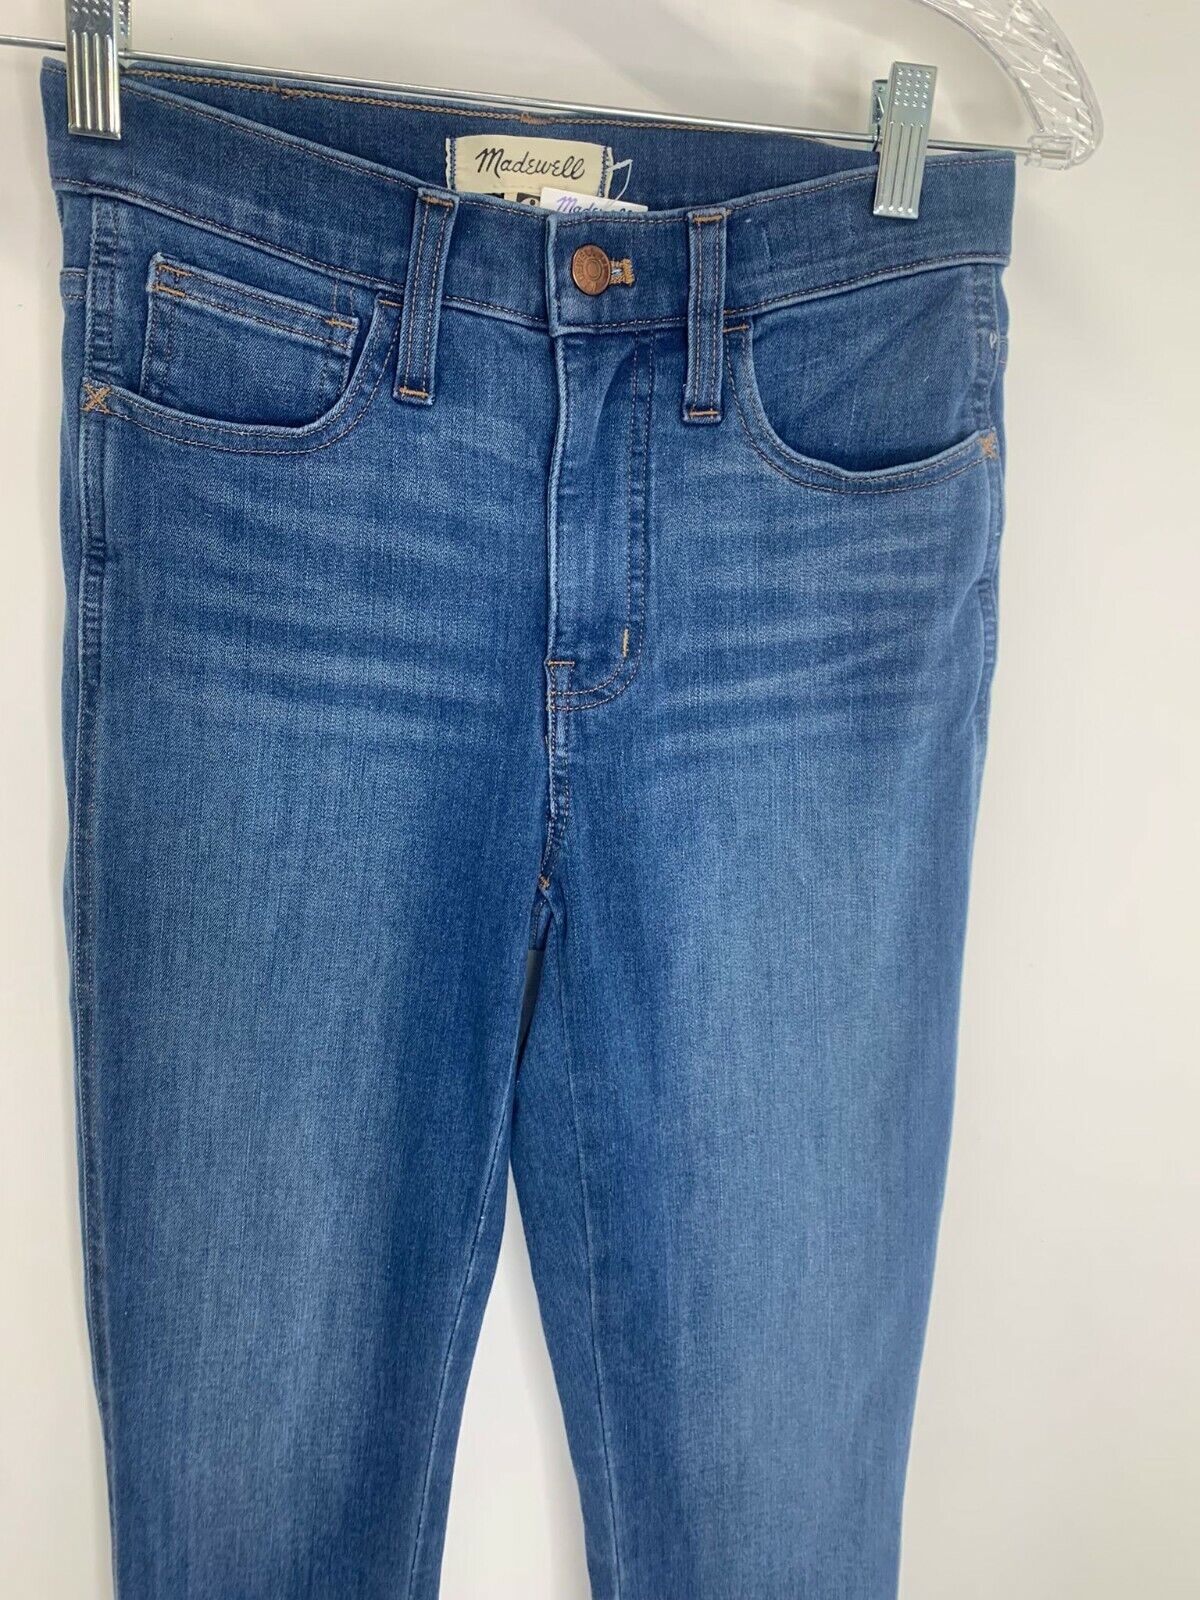 Madewell Women 25 Ellerby Medium Wash Roadtripper Jegging Skinny Jeans Ankle Zip